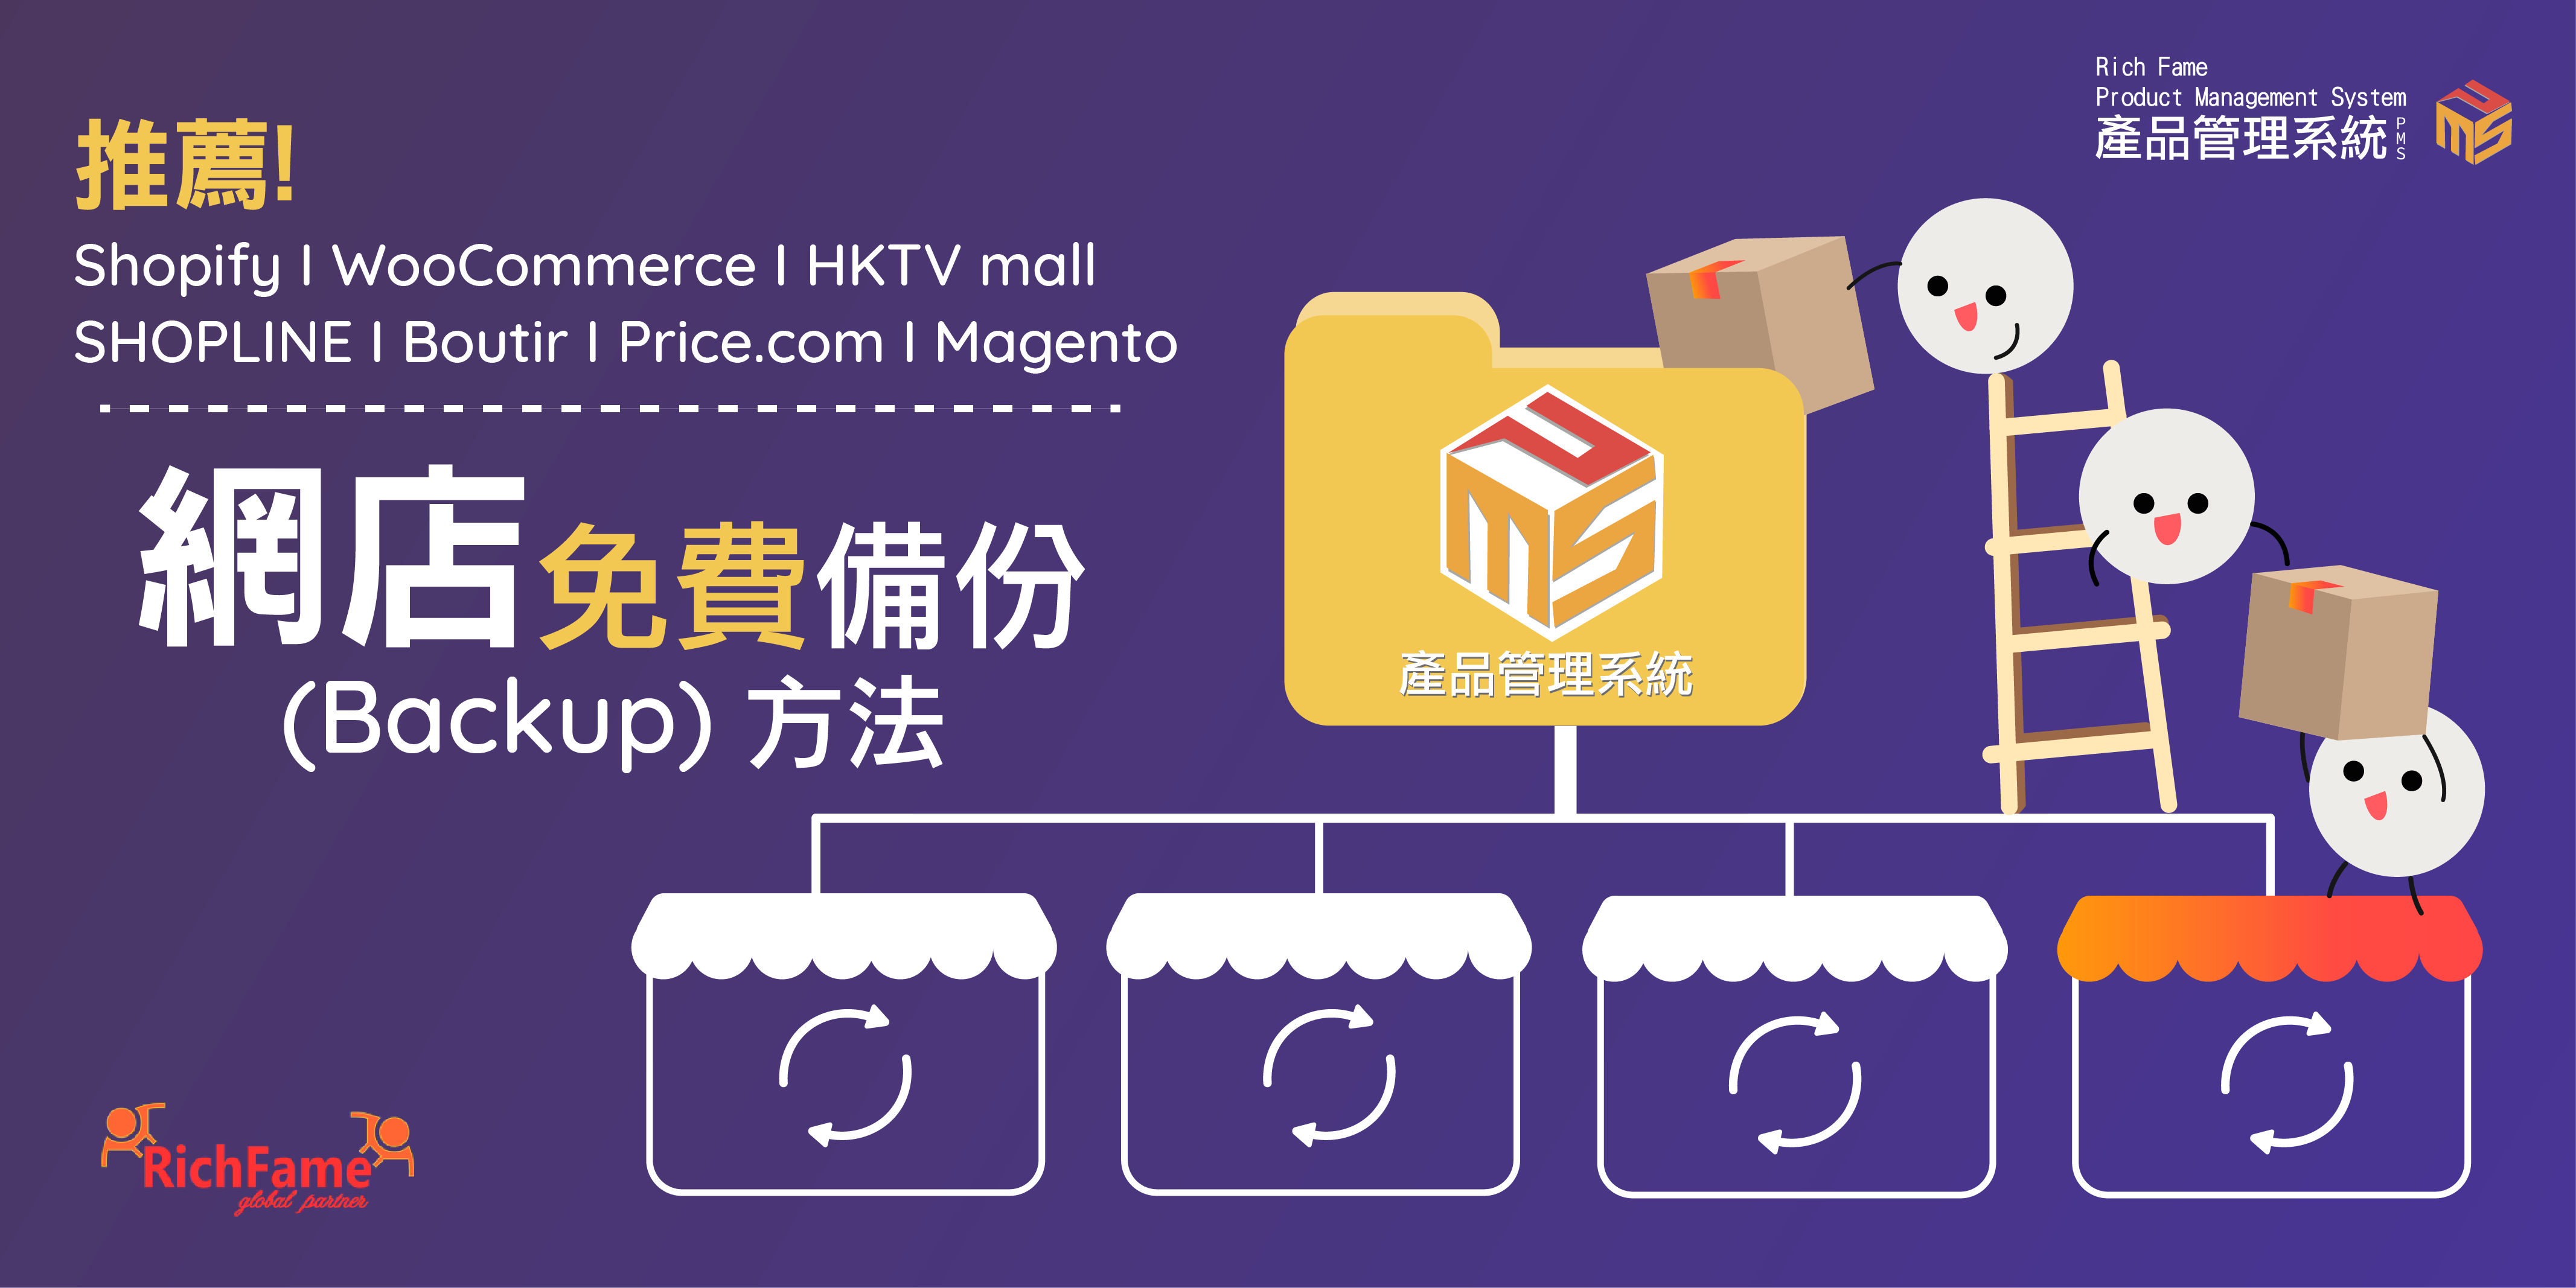 網店備份 (Backup) 免費方法推薦！Shopify/WooCommerce/Shopline/掌舖Boutir/HKTVmall/Price.com網店平台通用